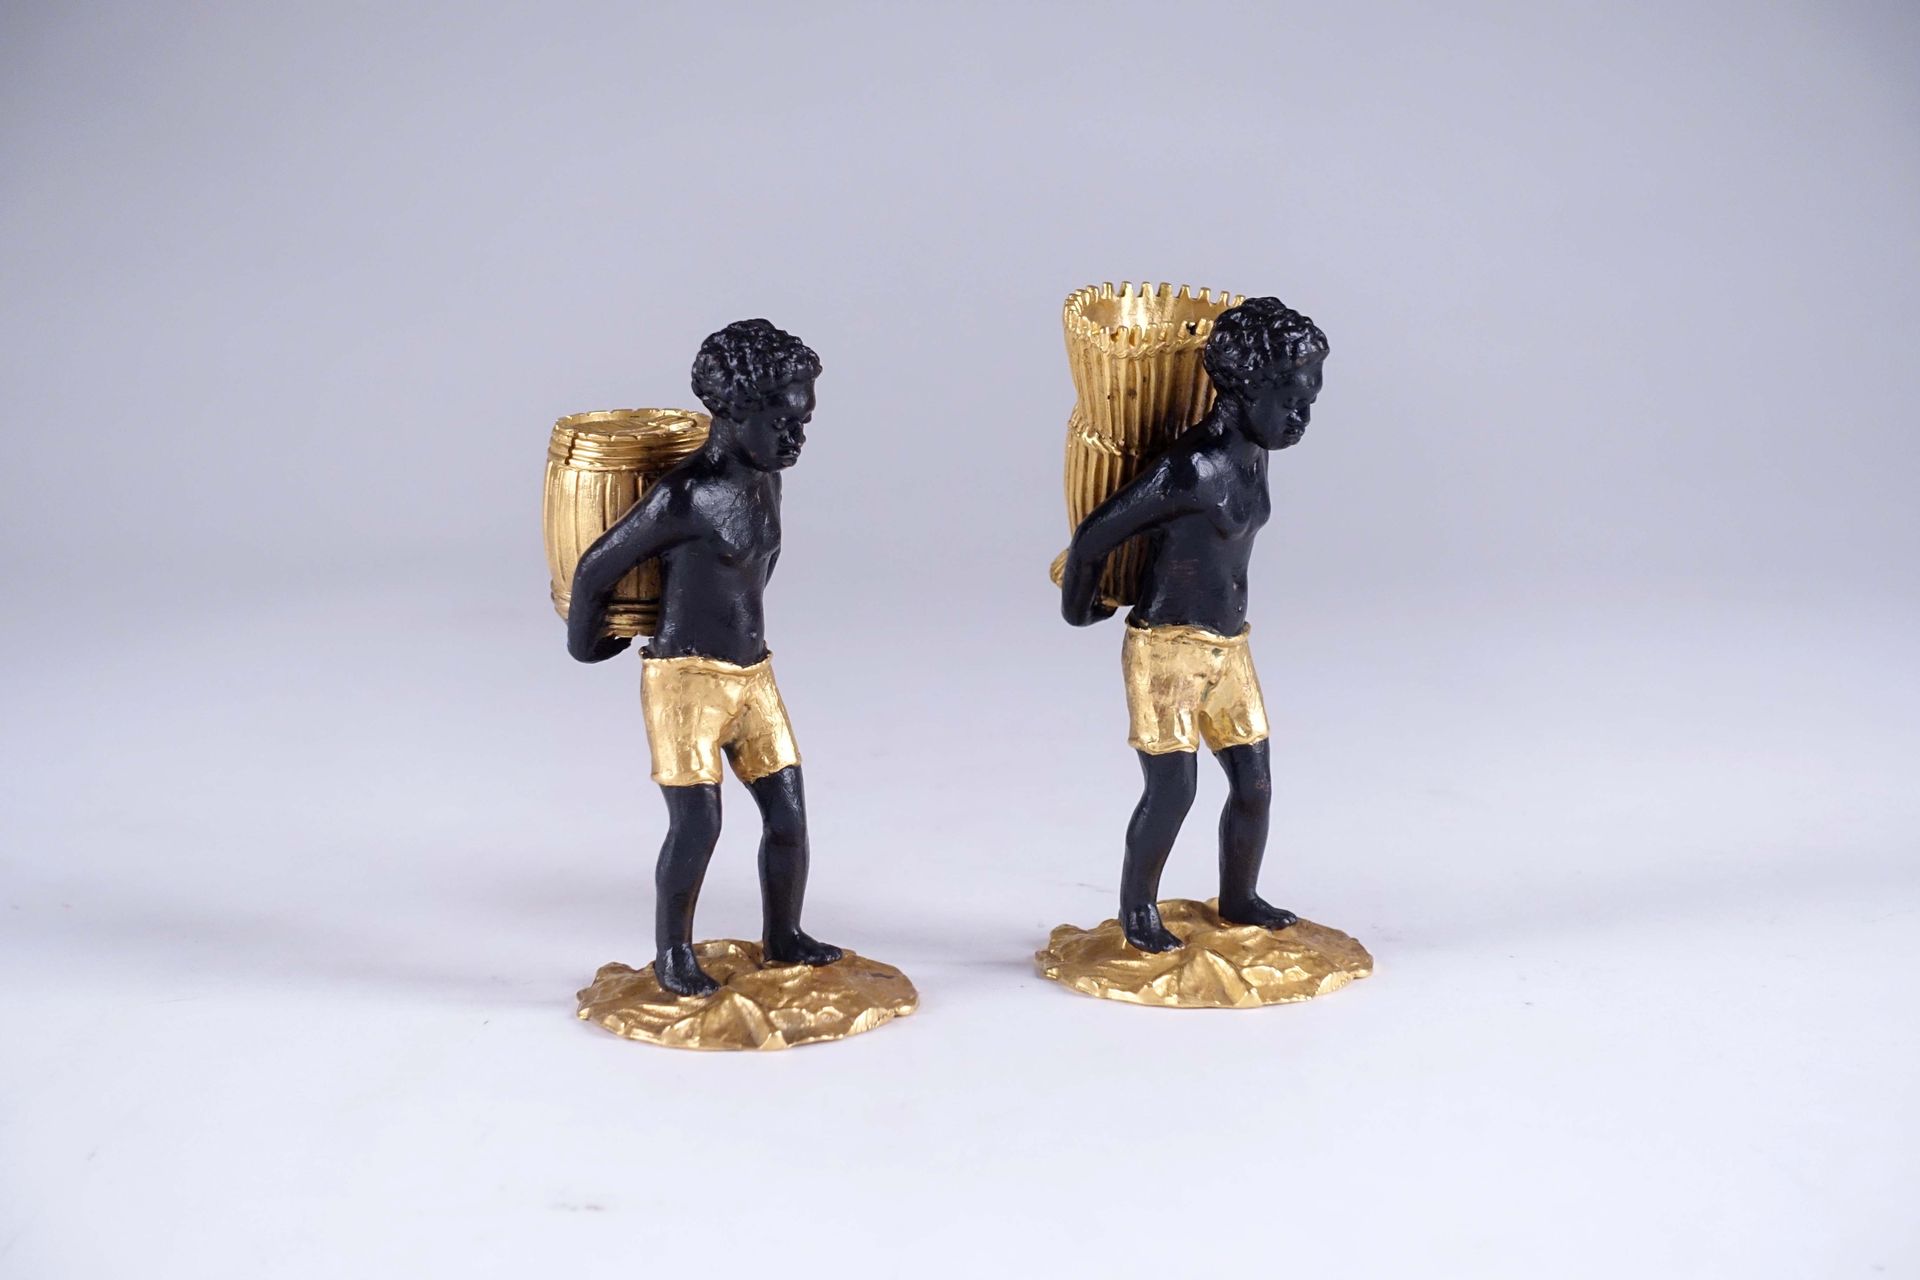 Olivier Gaube du Gers. 两个年轻的努比亚人，一个带着头巾，另一个带着桶。鎏金铜和青铜的一对雕像。每个人都签署了Gaube du Gers。&hellip;